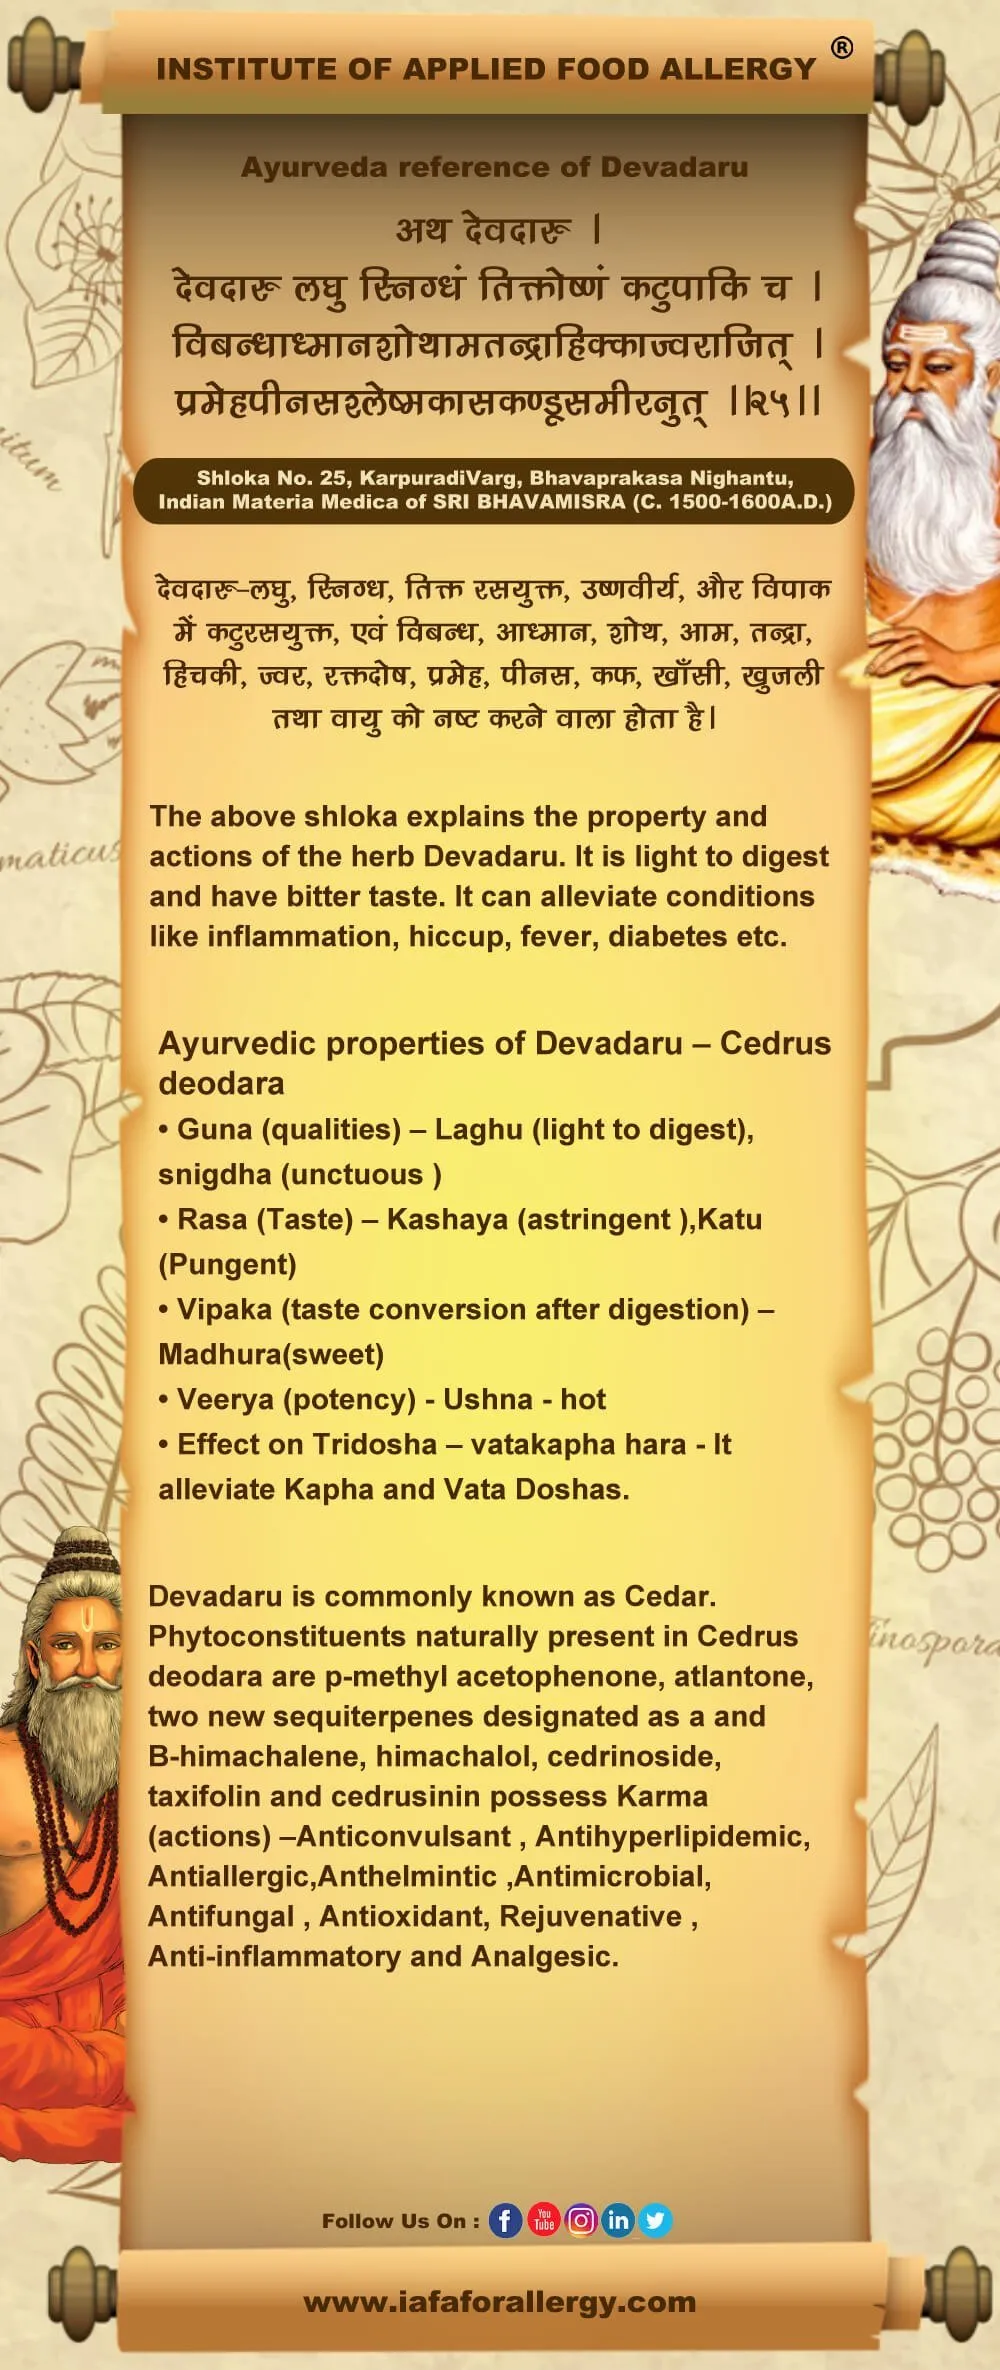 Ayurveda Reference of Devadaru (Cedrus deodara)